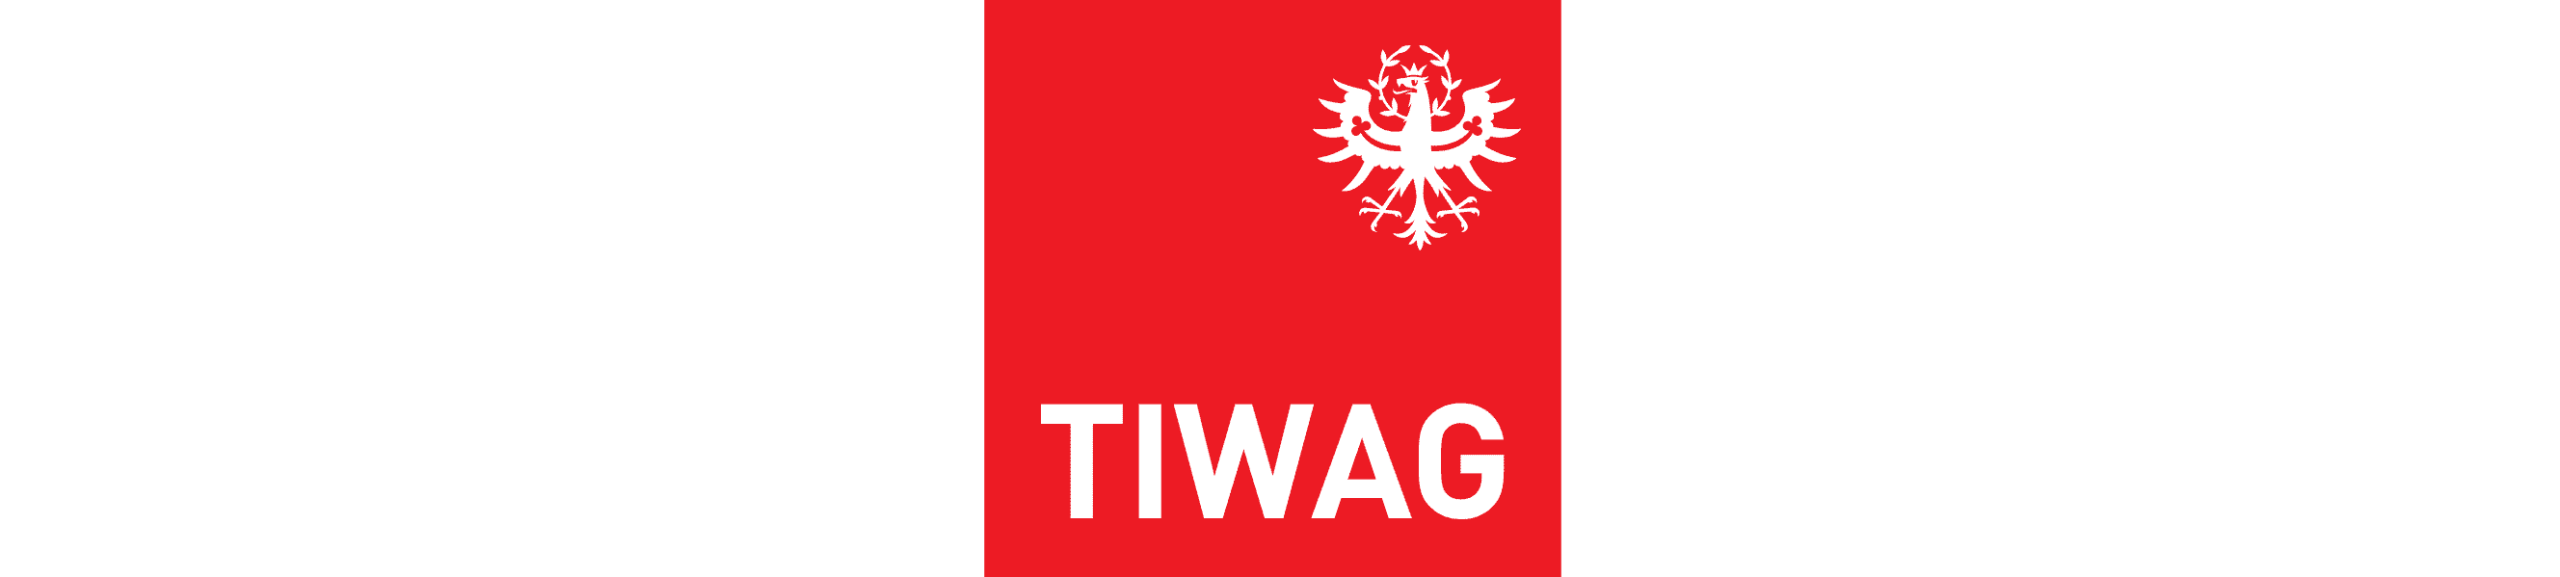 tiwag-logo